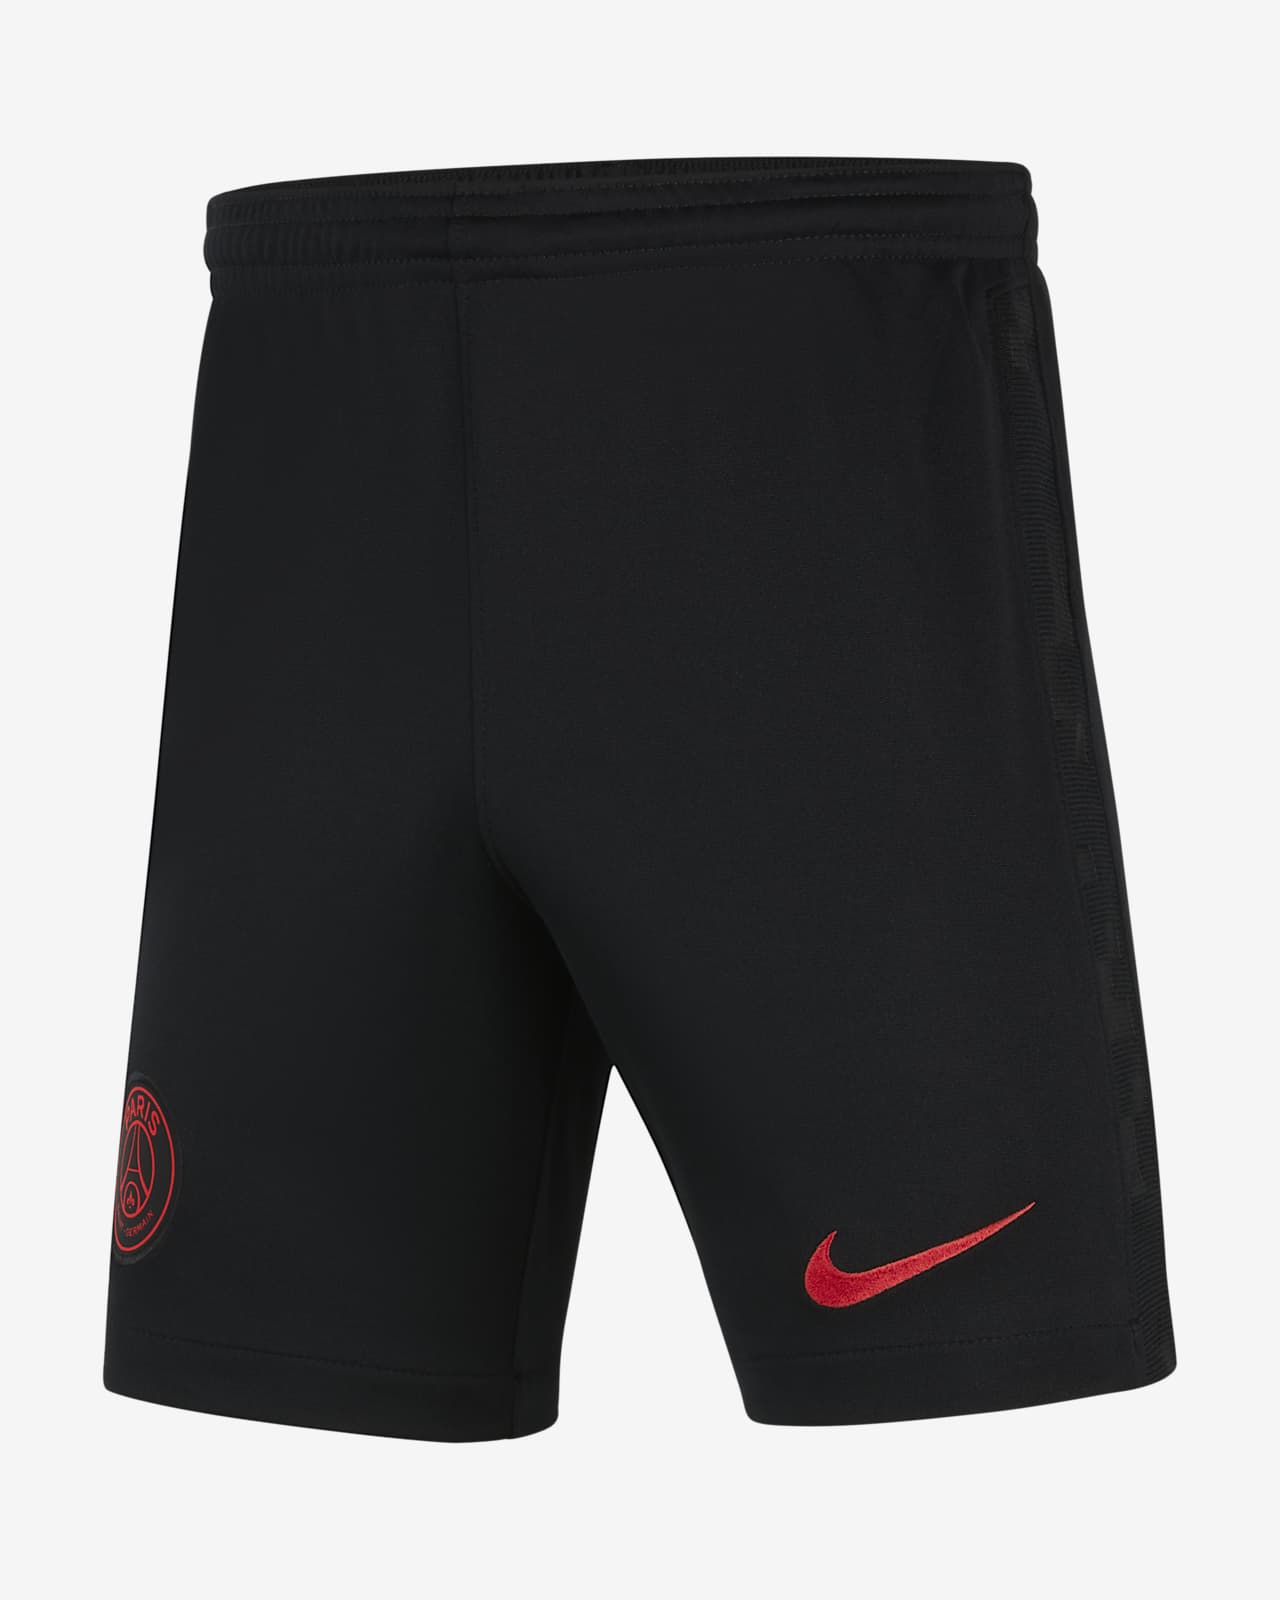 Paris Saint Germain Football Soccer Suit Shorts Jersey Shirt Nike 2014  Youth M